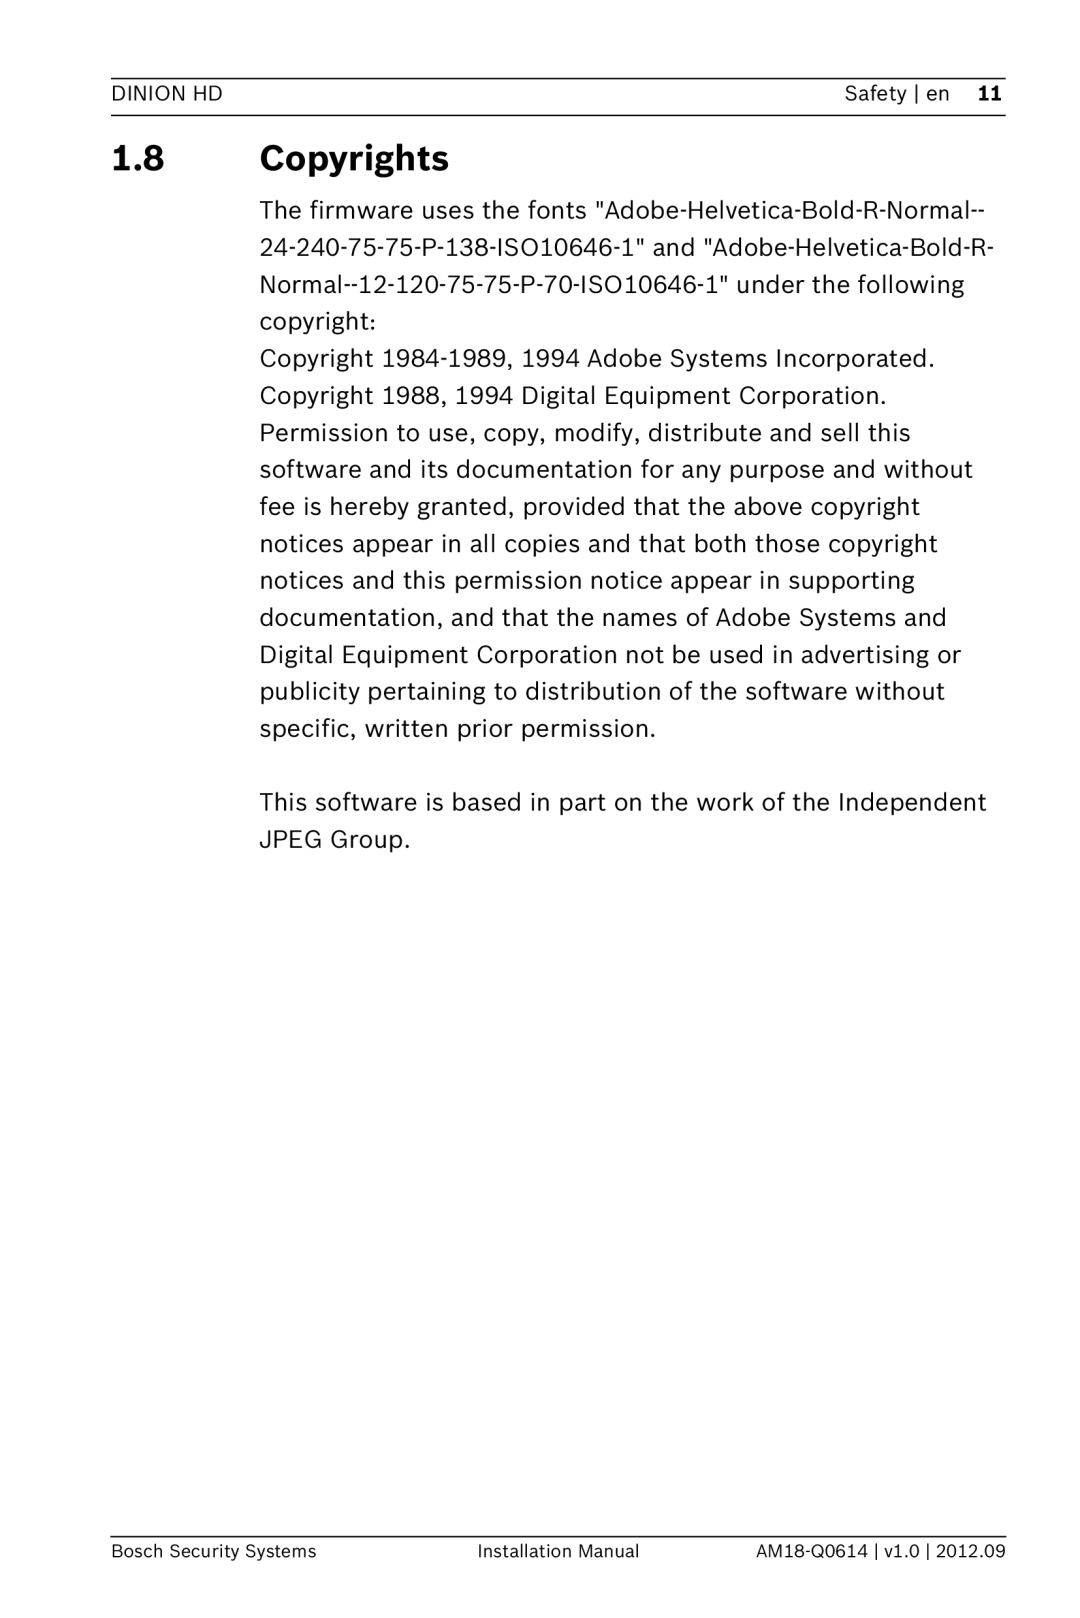 Bosch Appliances NBN-733 installation manual 1.8Copyrights 